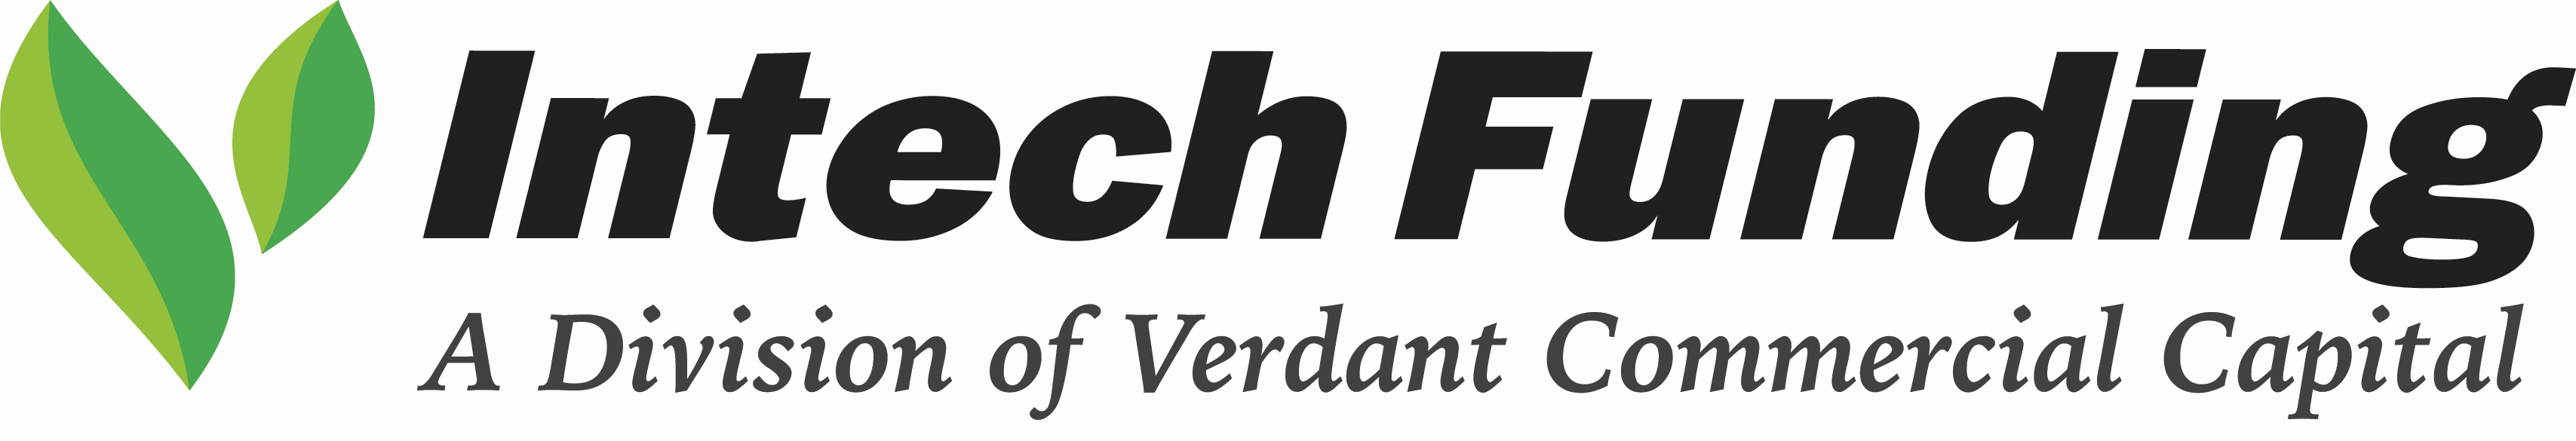 Intech Funding logo